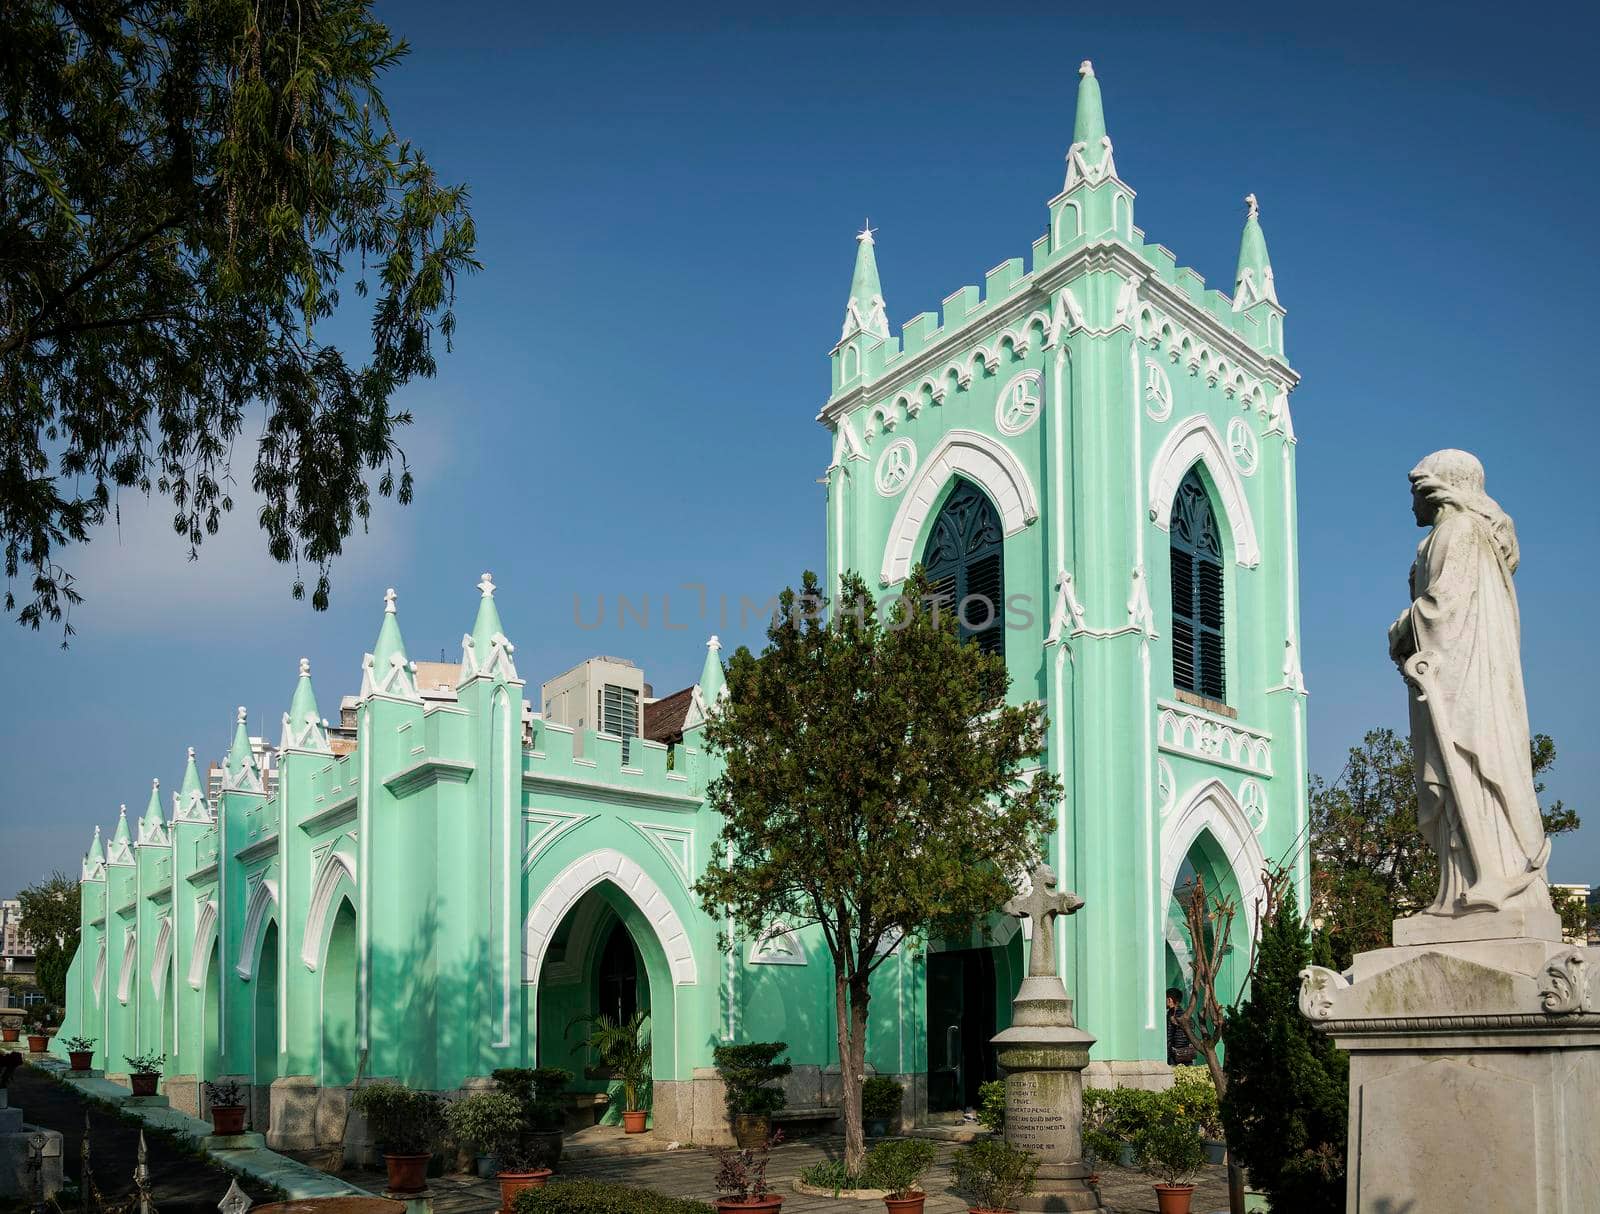 Saint Michael landmark portuguese colonial style church in macau city china